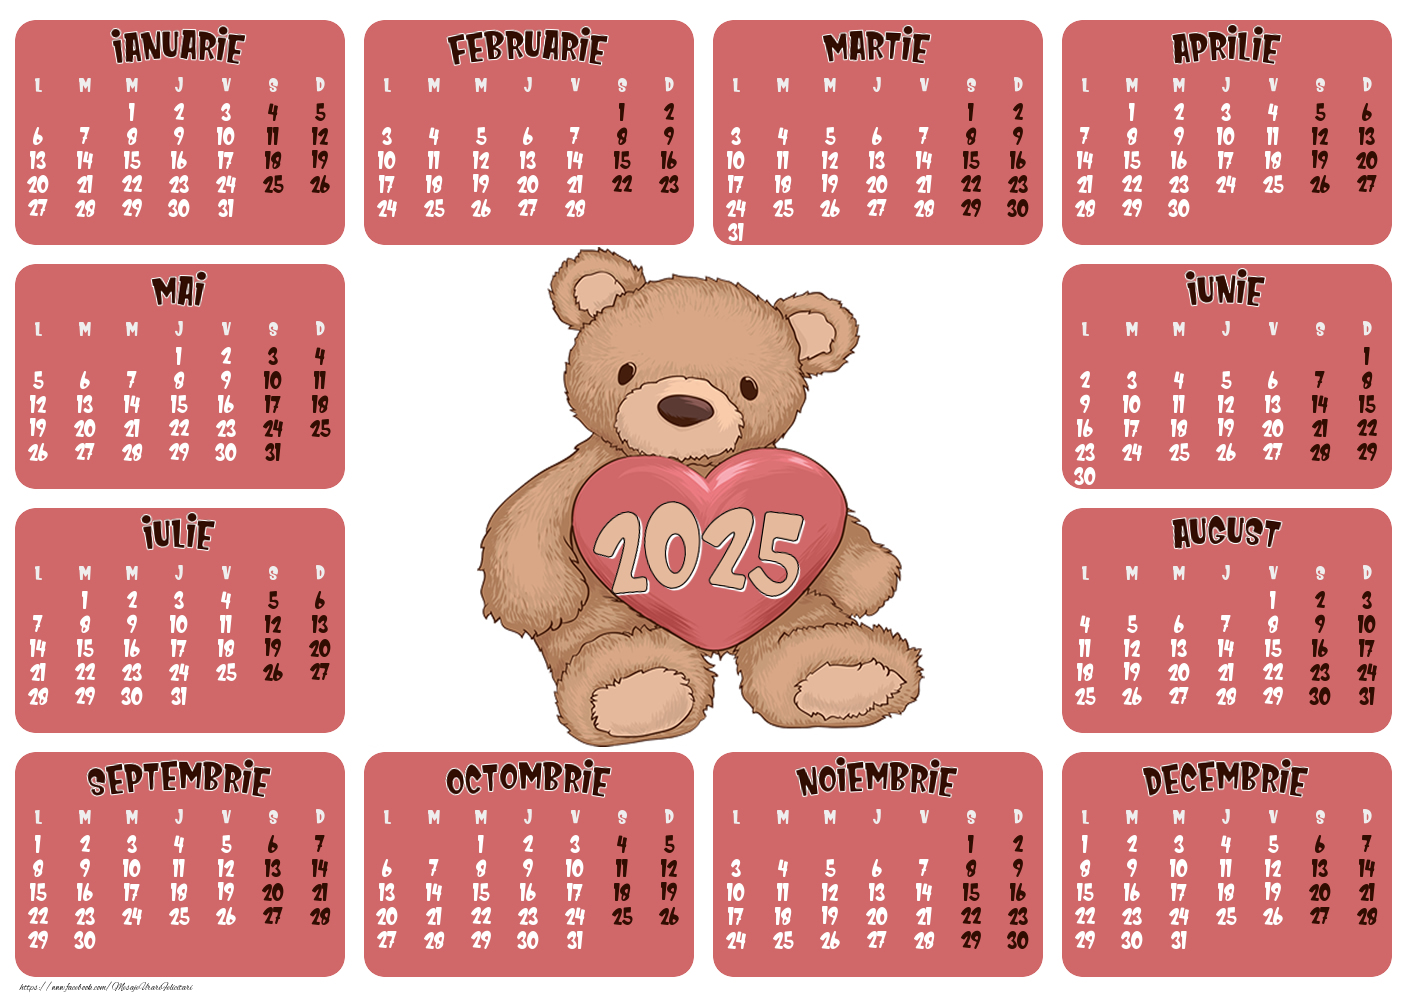 Imagini cu calendare - Calendar 2025 - Ursulet - Model 0012 - mesajeurarifelicitari.com